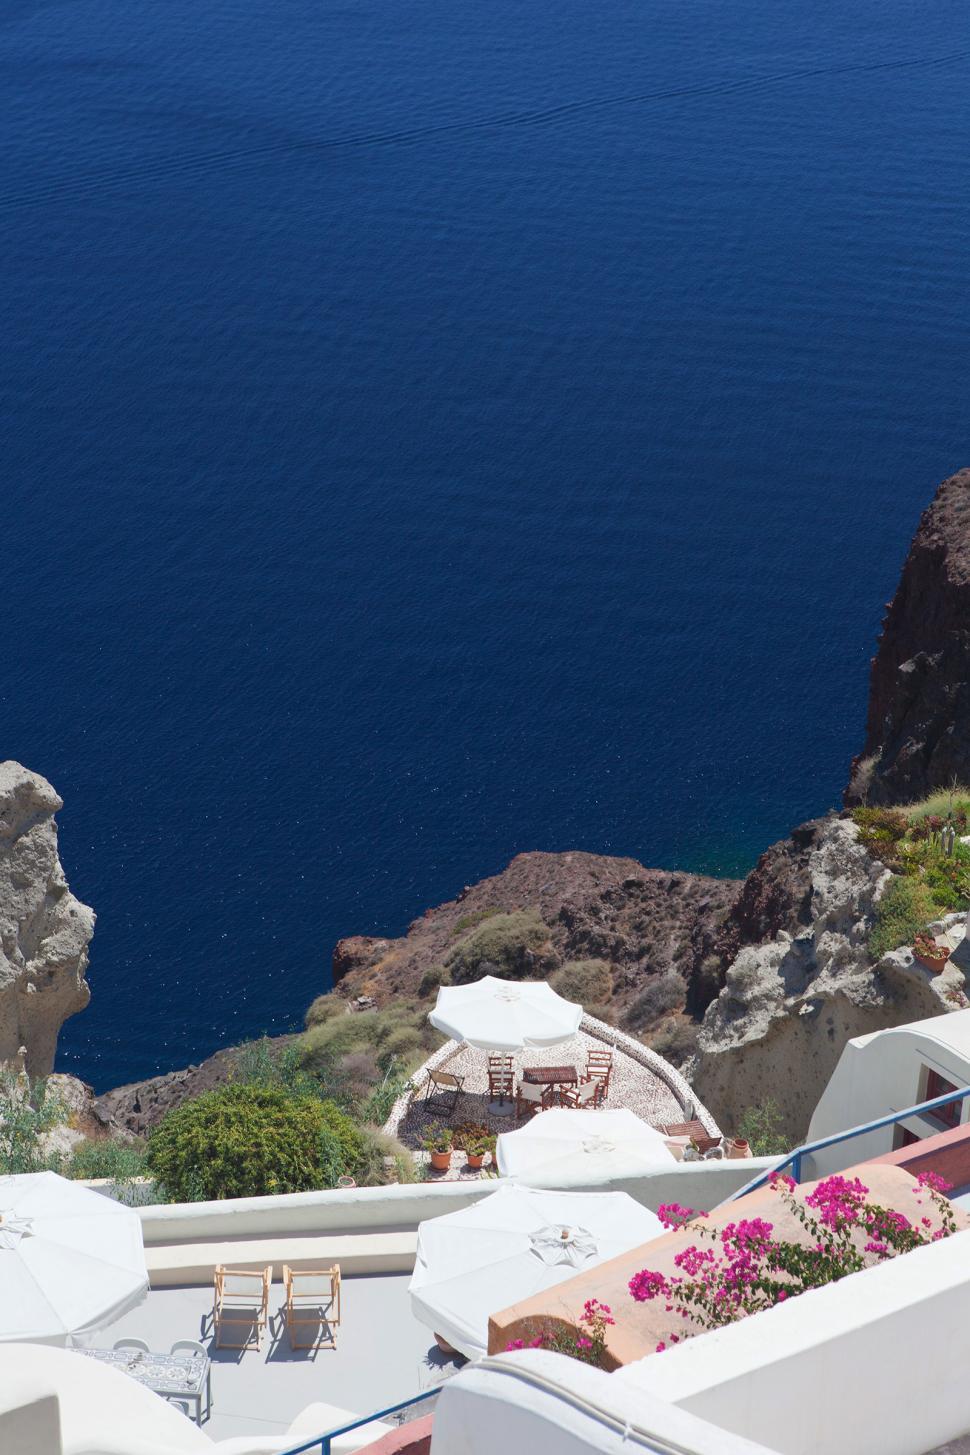 Free Image of Santorini 